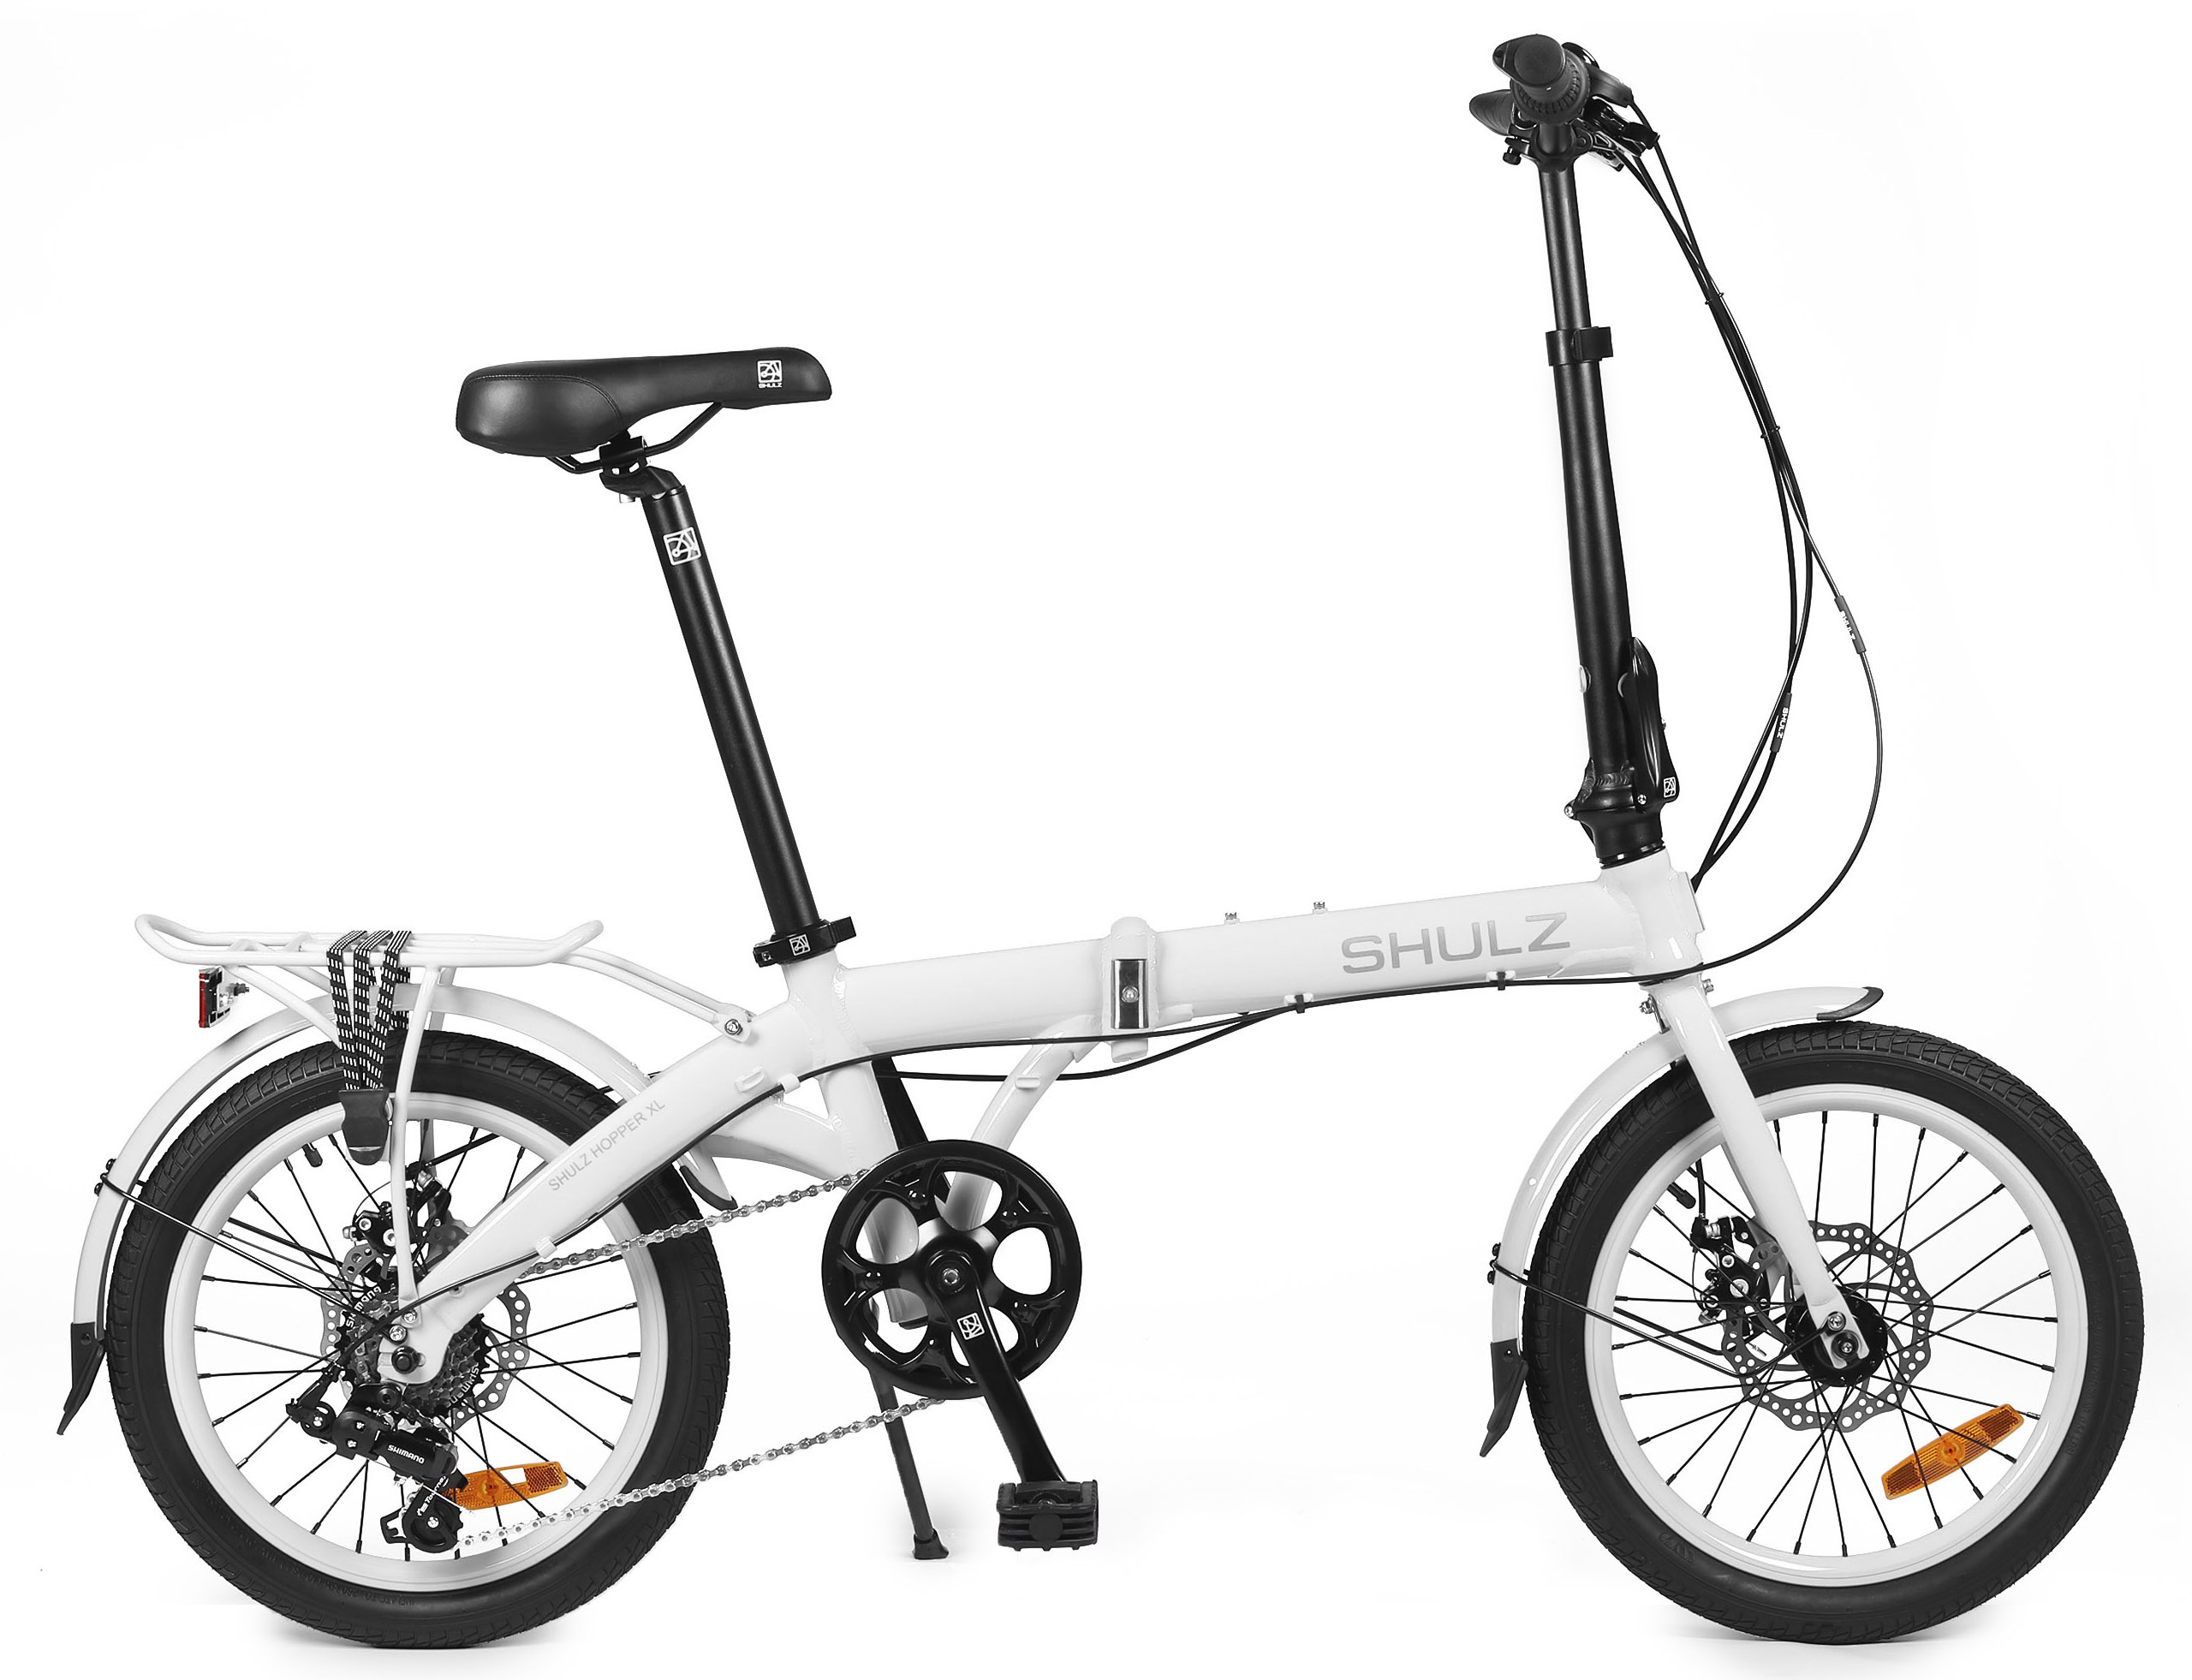  Велосипед Shulz Hopper XL 2020